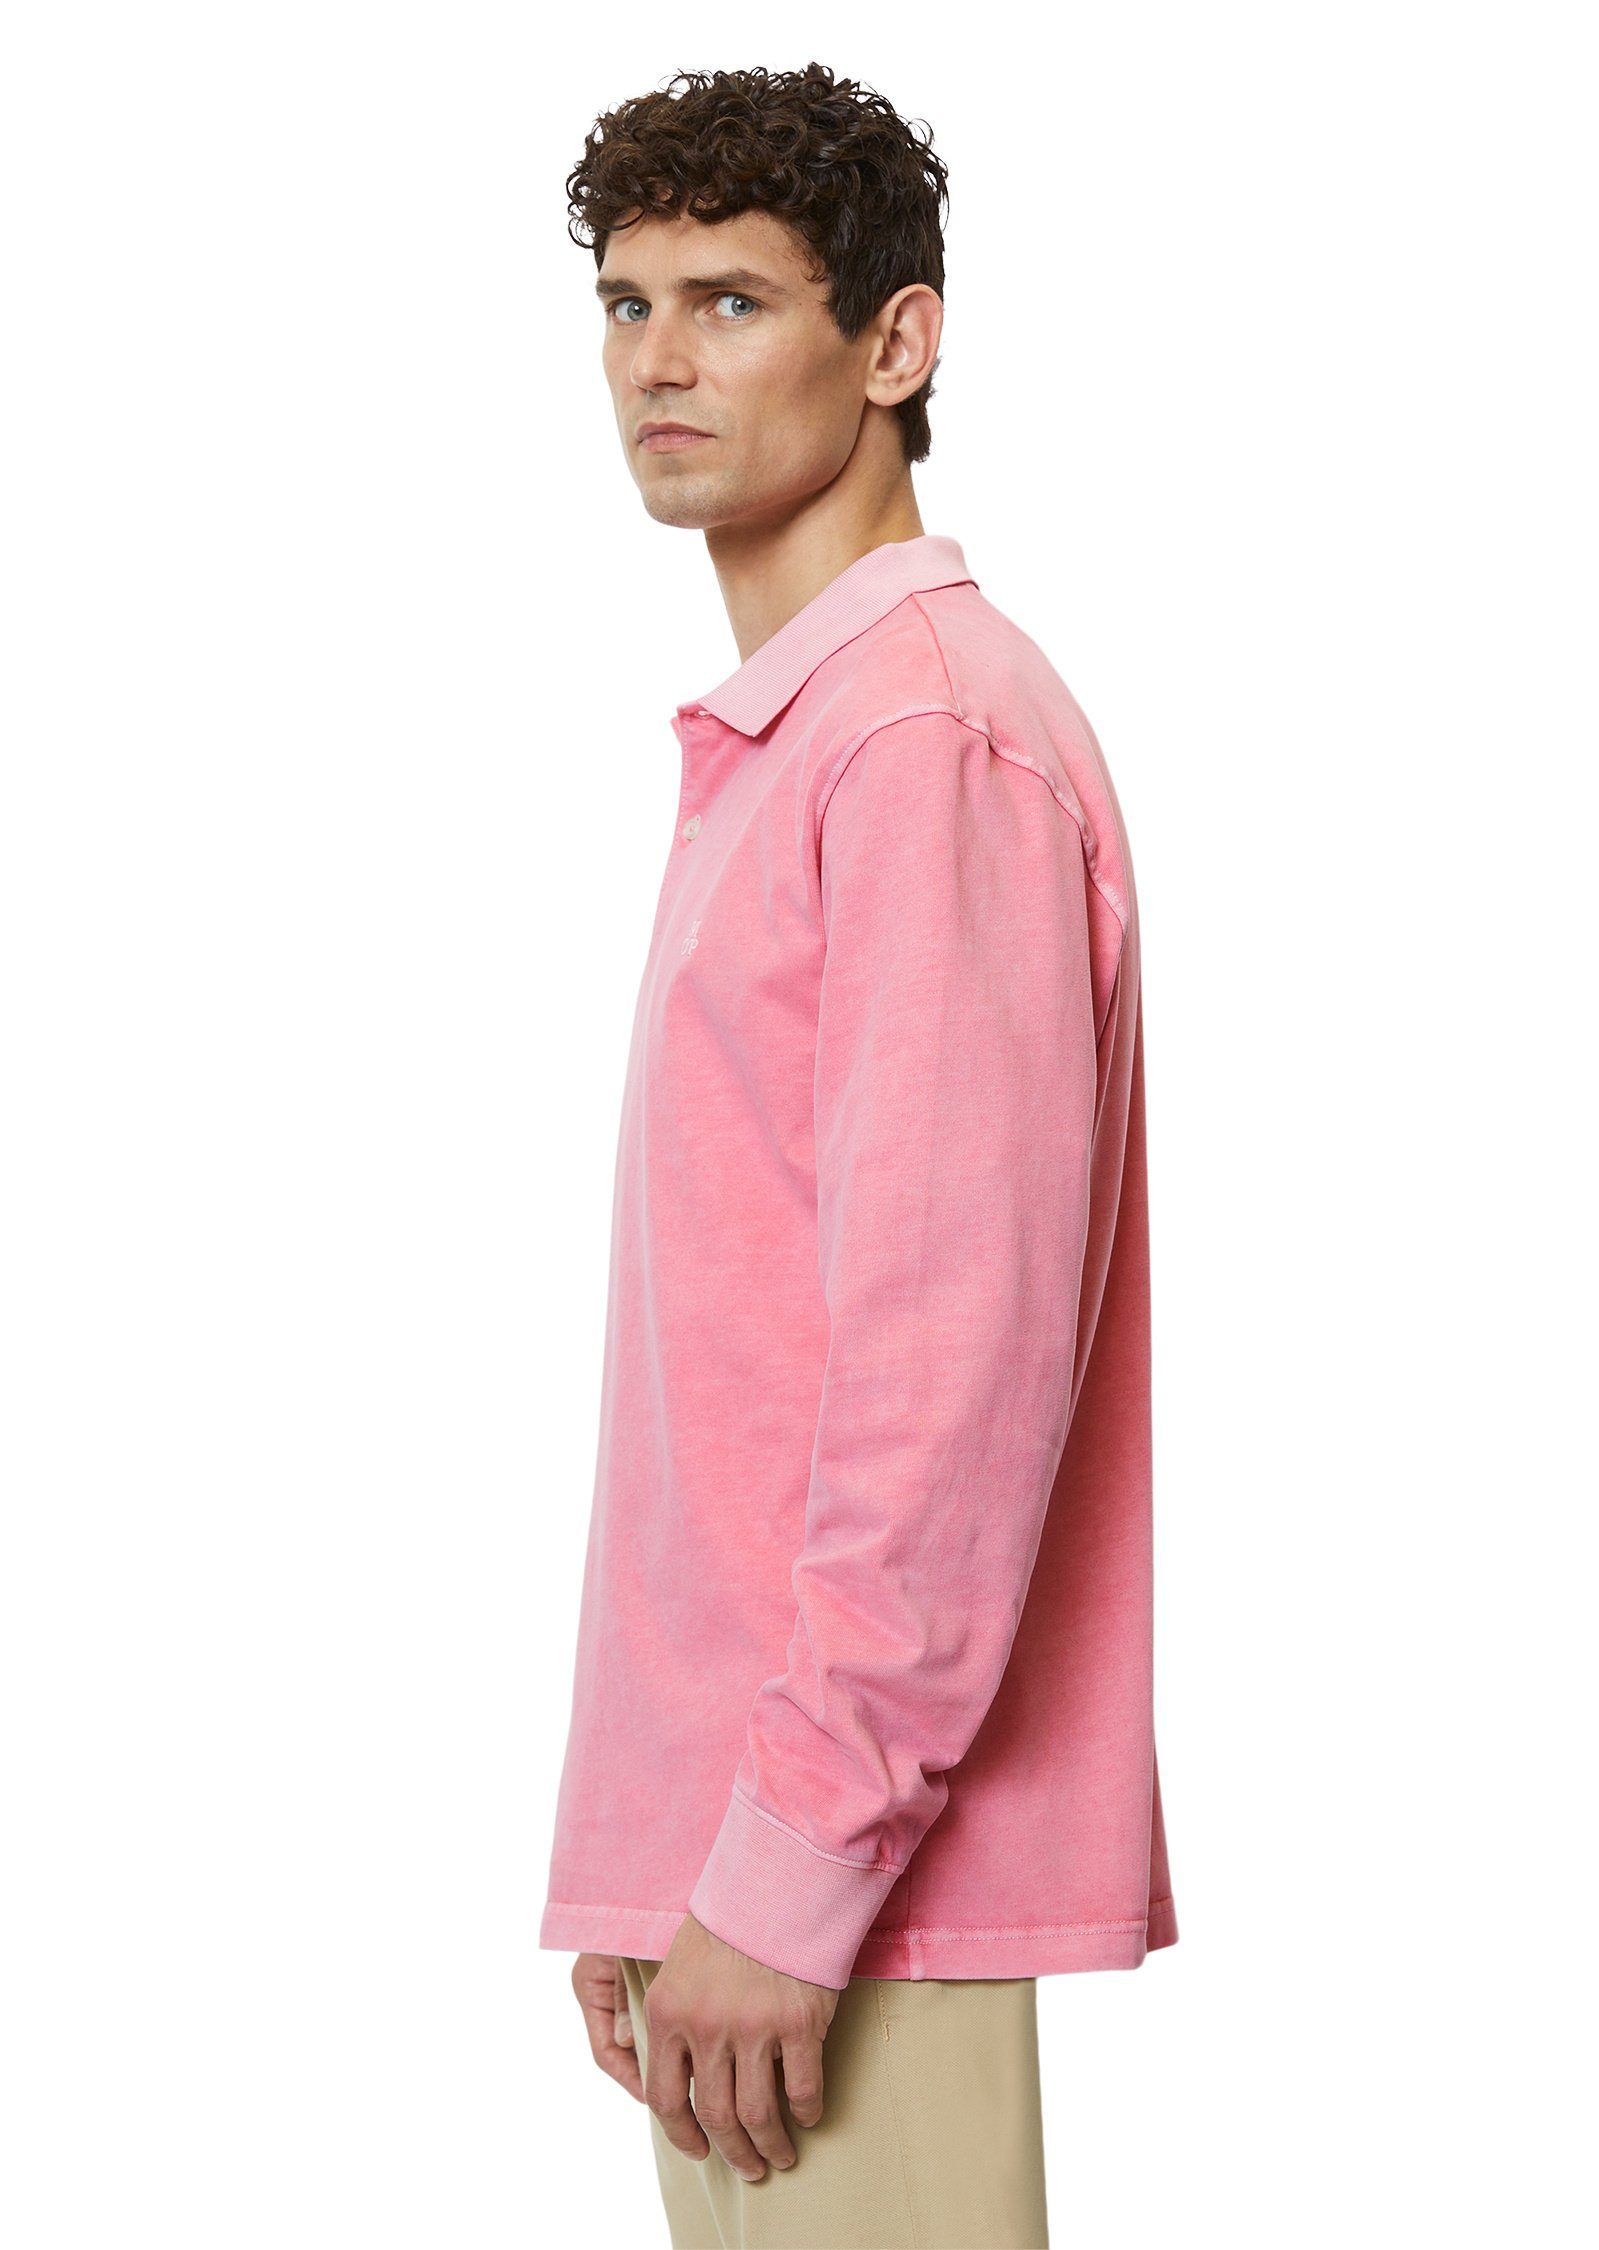 Marc O'Polo Soft-Touch-Jersey-Qualität rosa Langarm-Poloshirt schwerer in